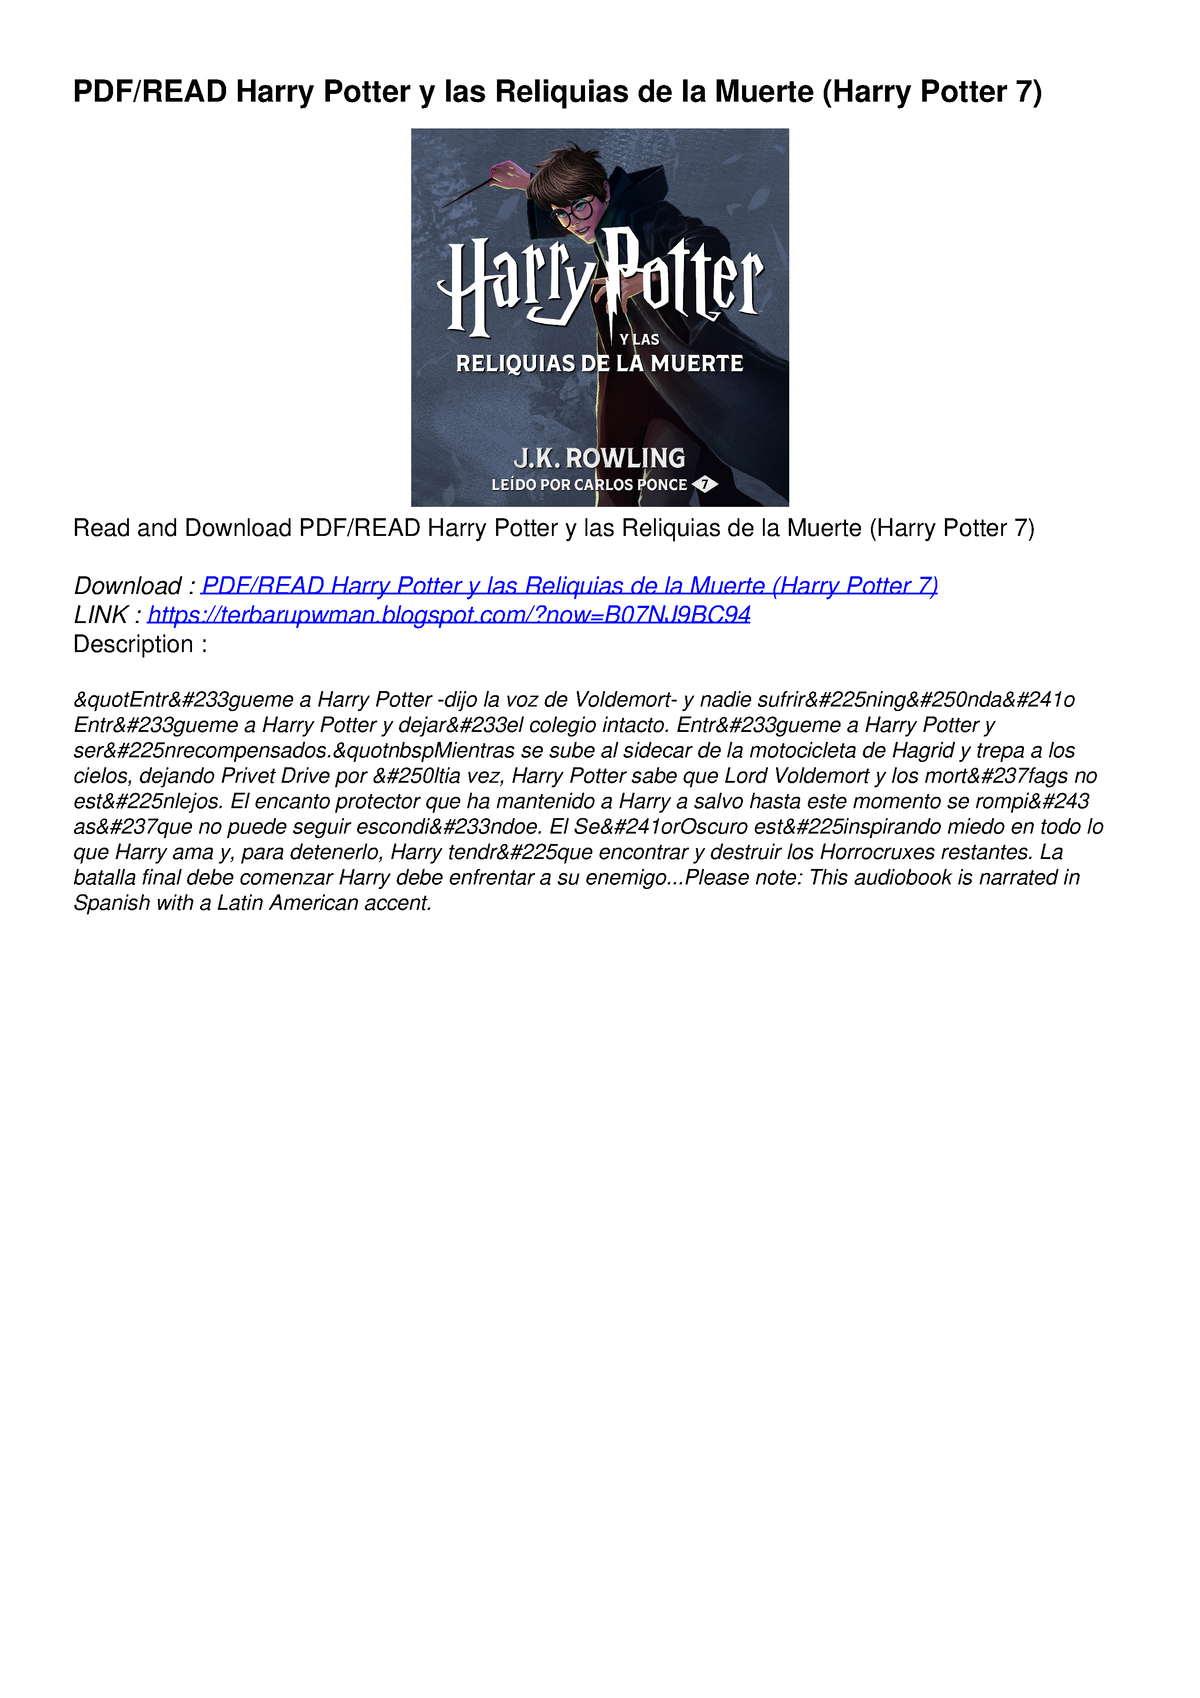 harry potter book 1 online pdf